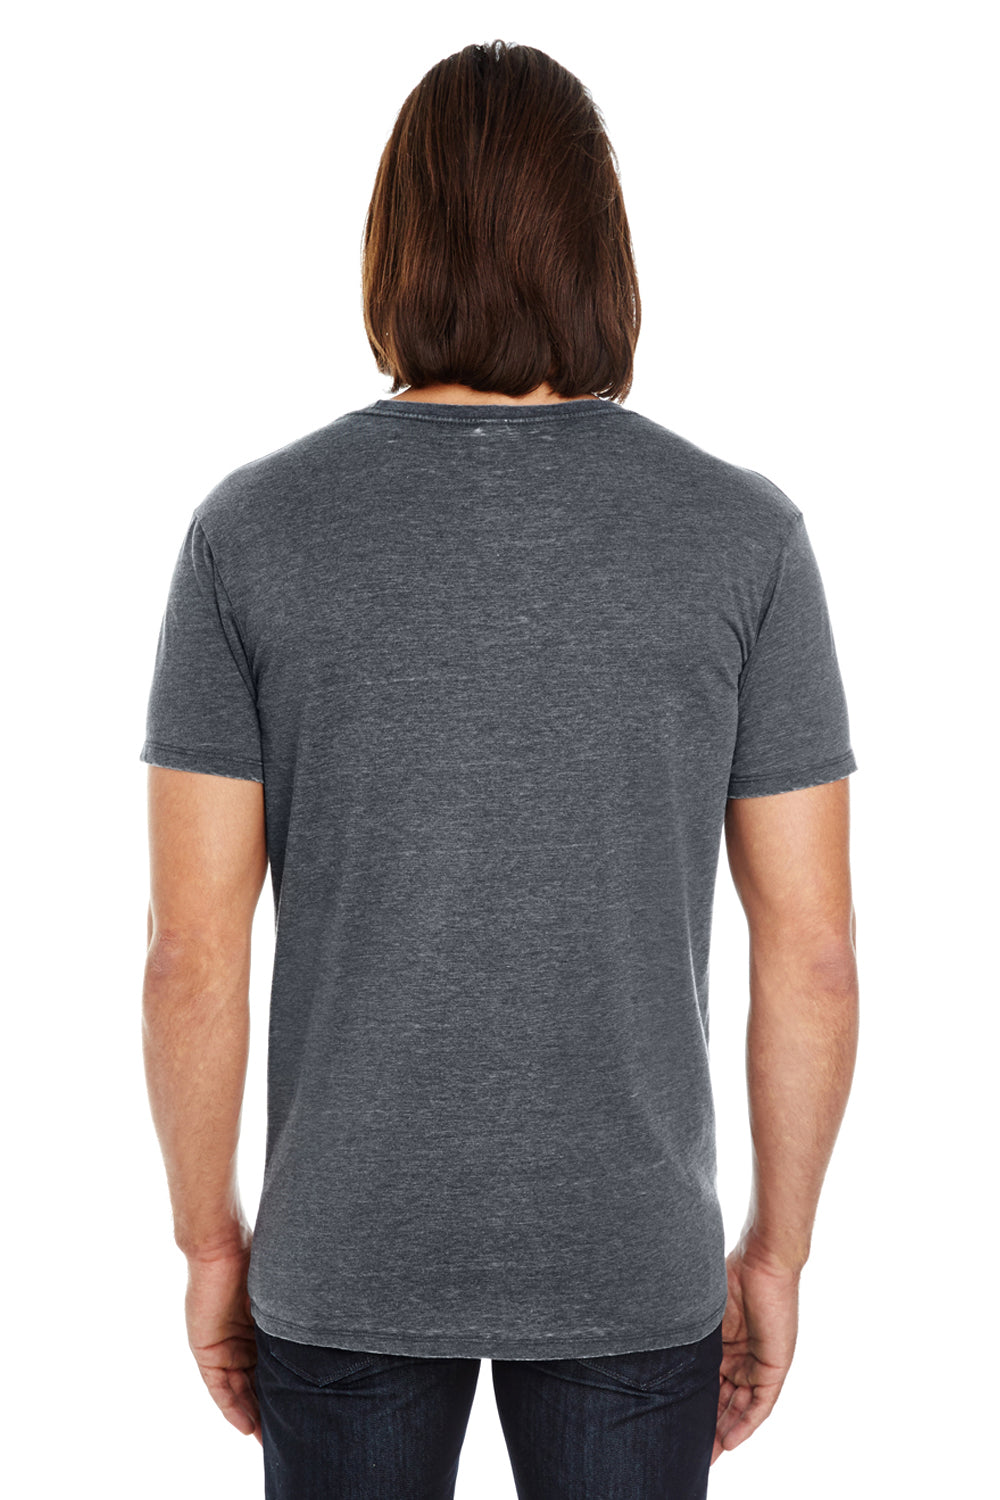 Threadfast Apparel 108A Mens Vintage Dye Short Sleeve Crewneck T-Shirt Charcoal Grey Back